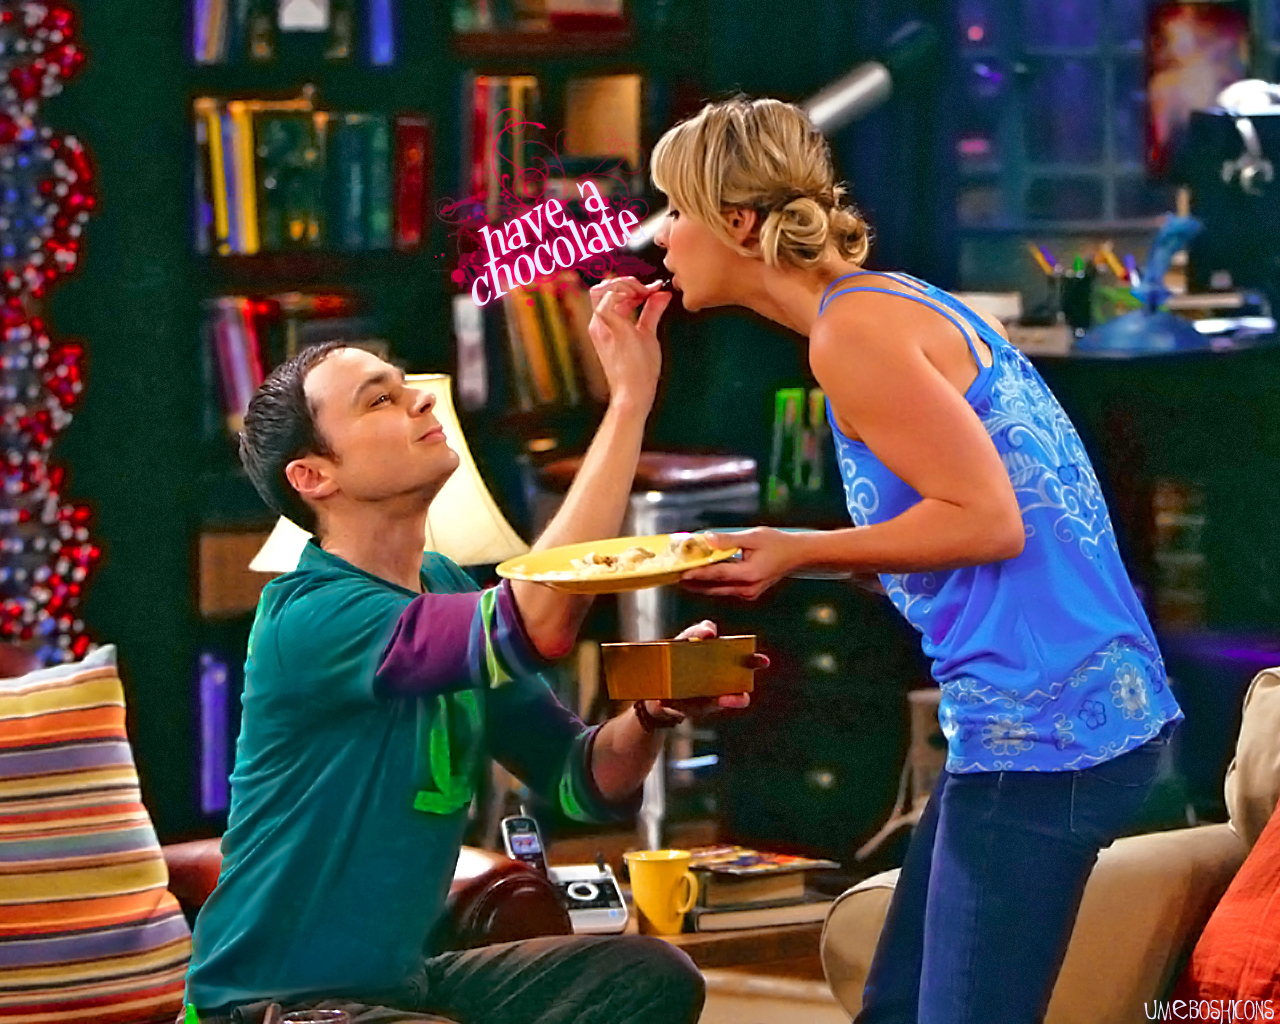 Big Bang Theory Sheldon Wallpaper